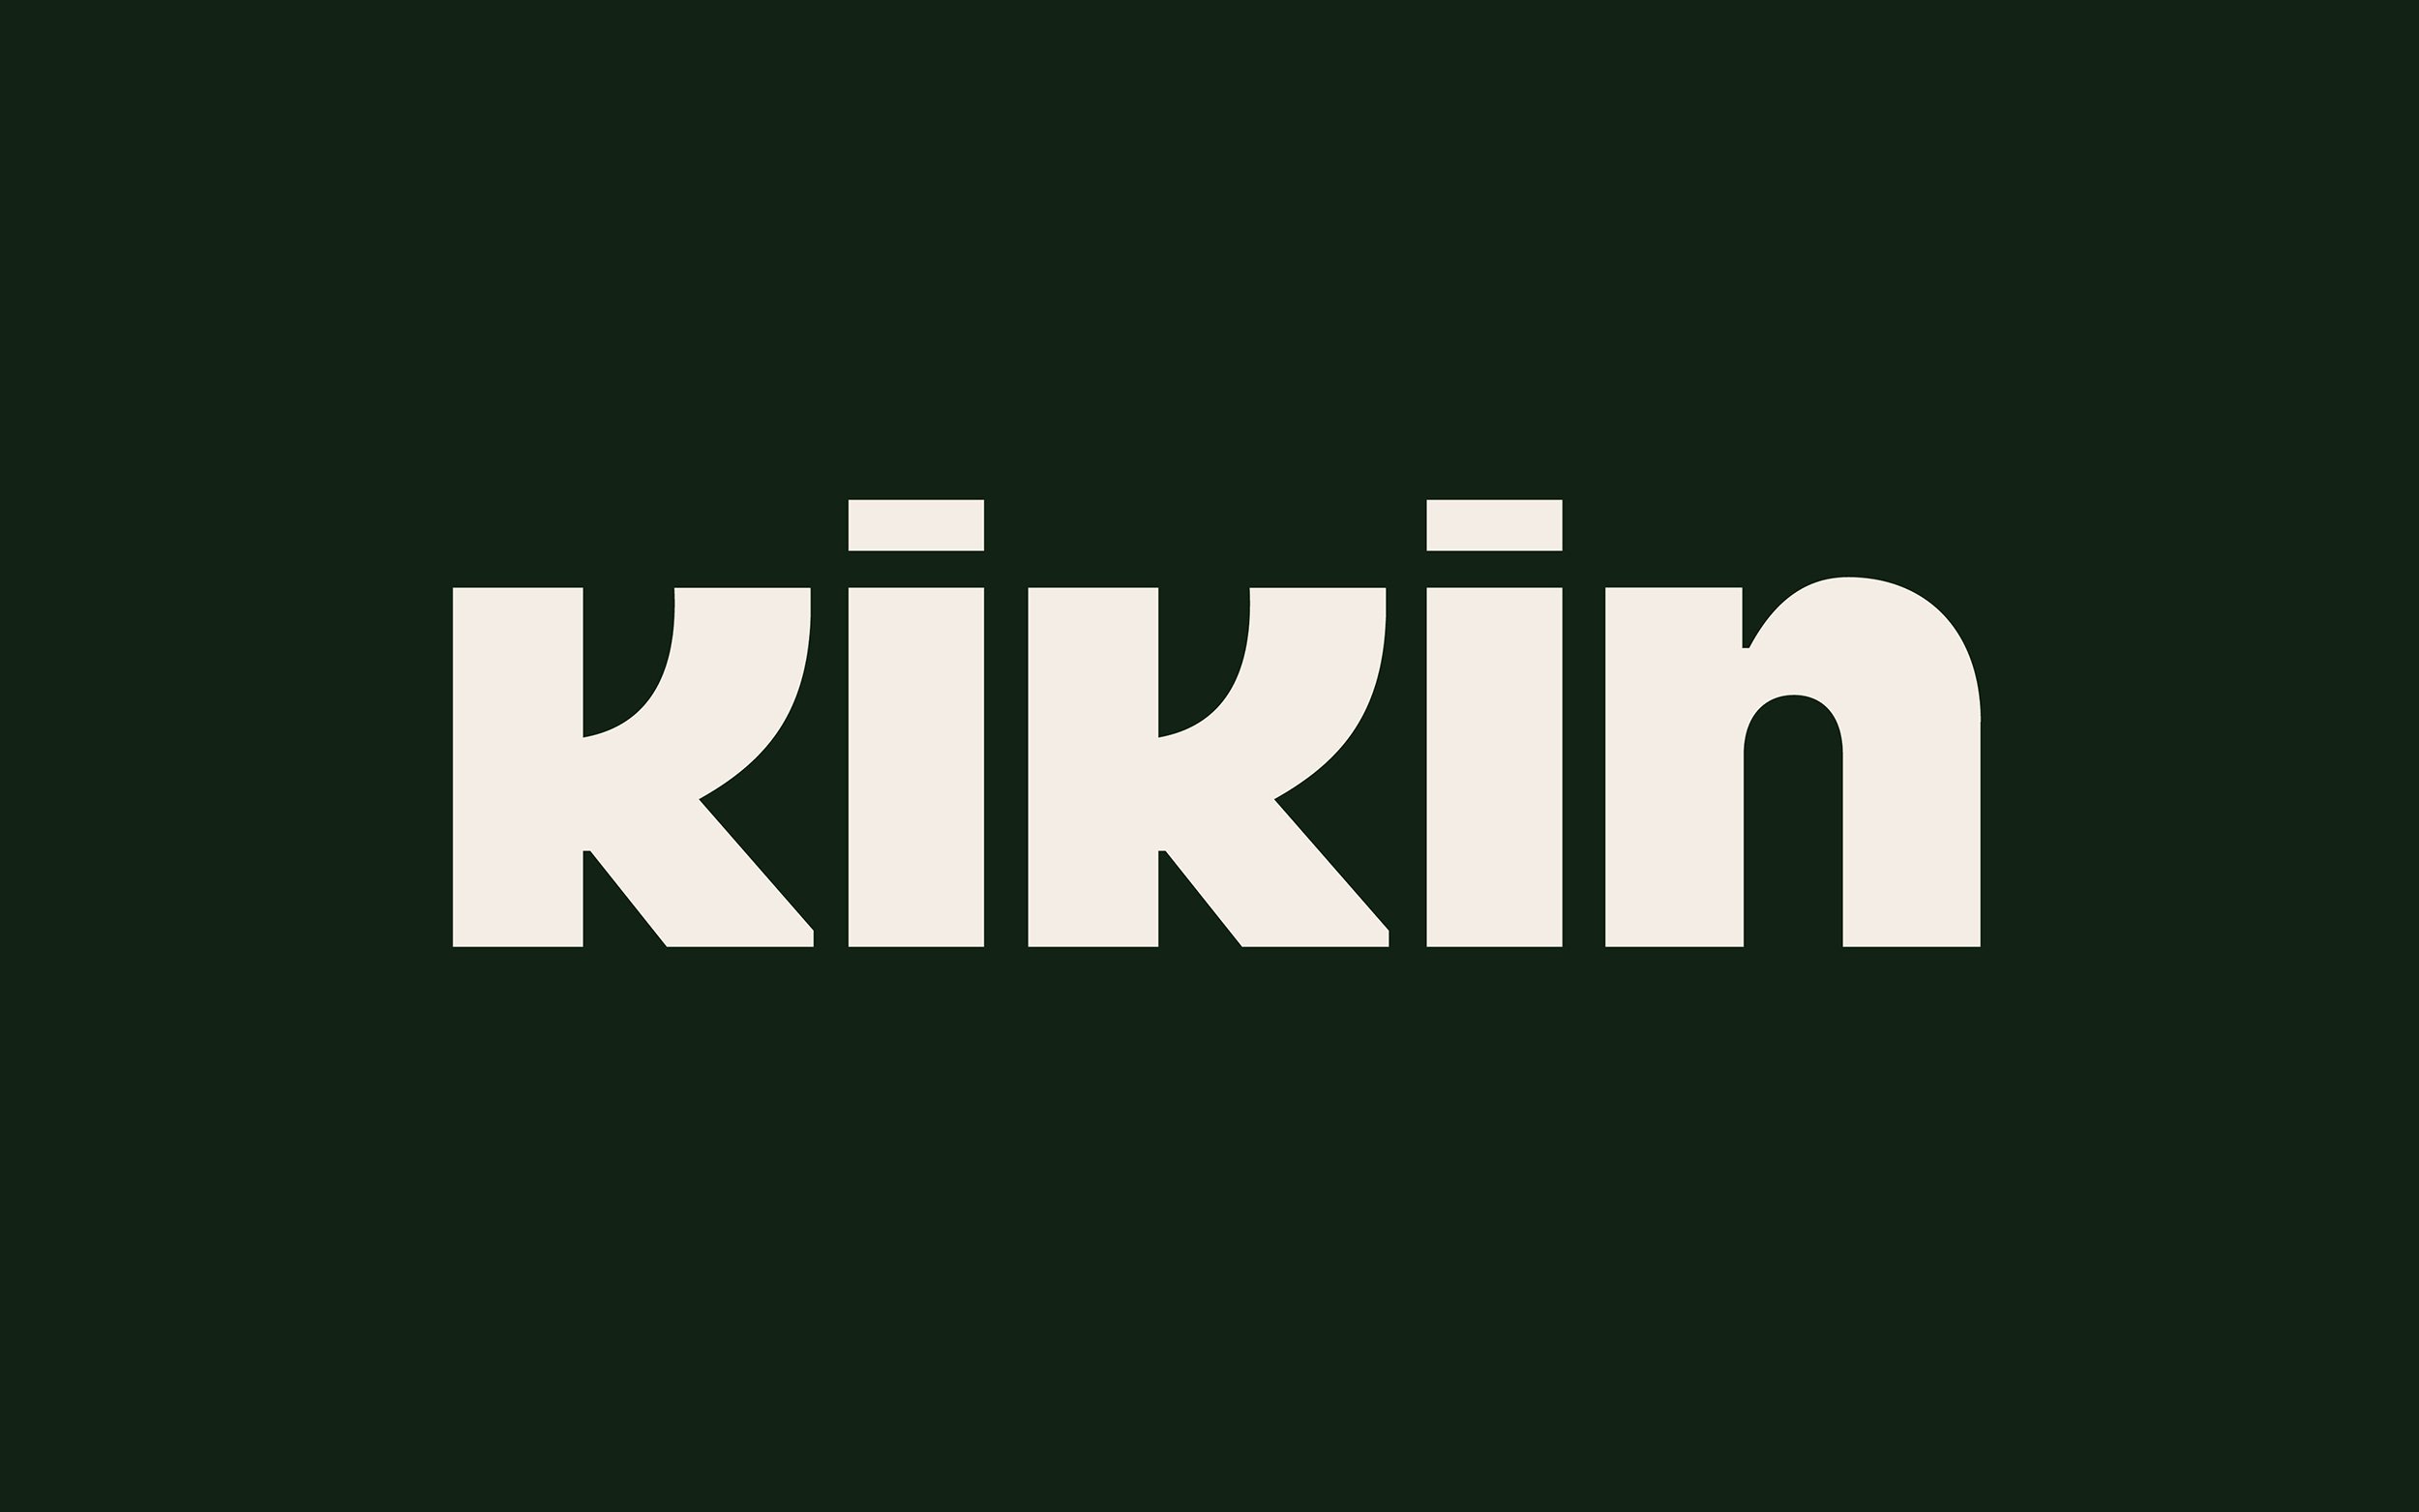 Logo and brand identity for digital finance platform Kikin designed by London-based design studio Koto